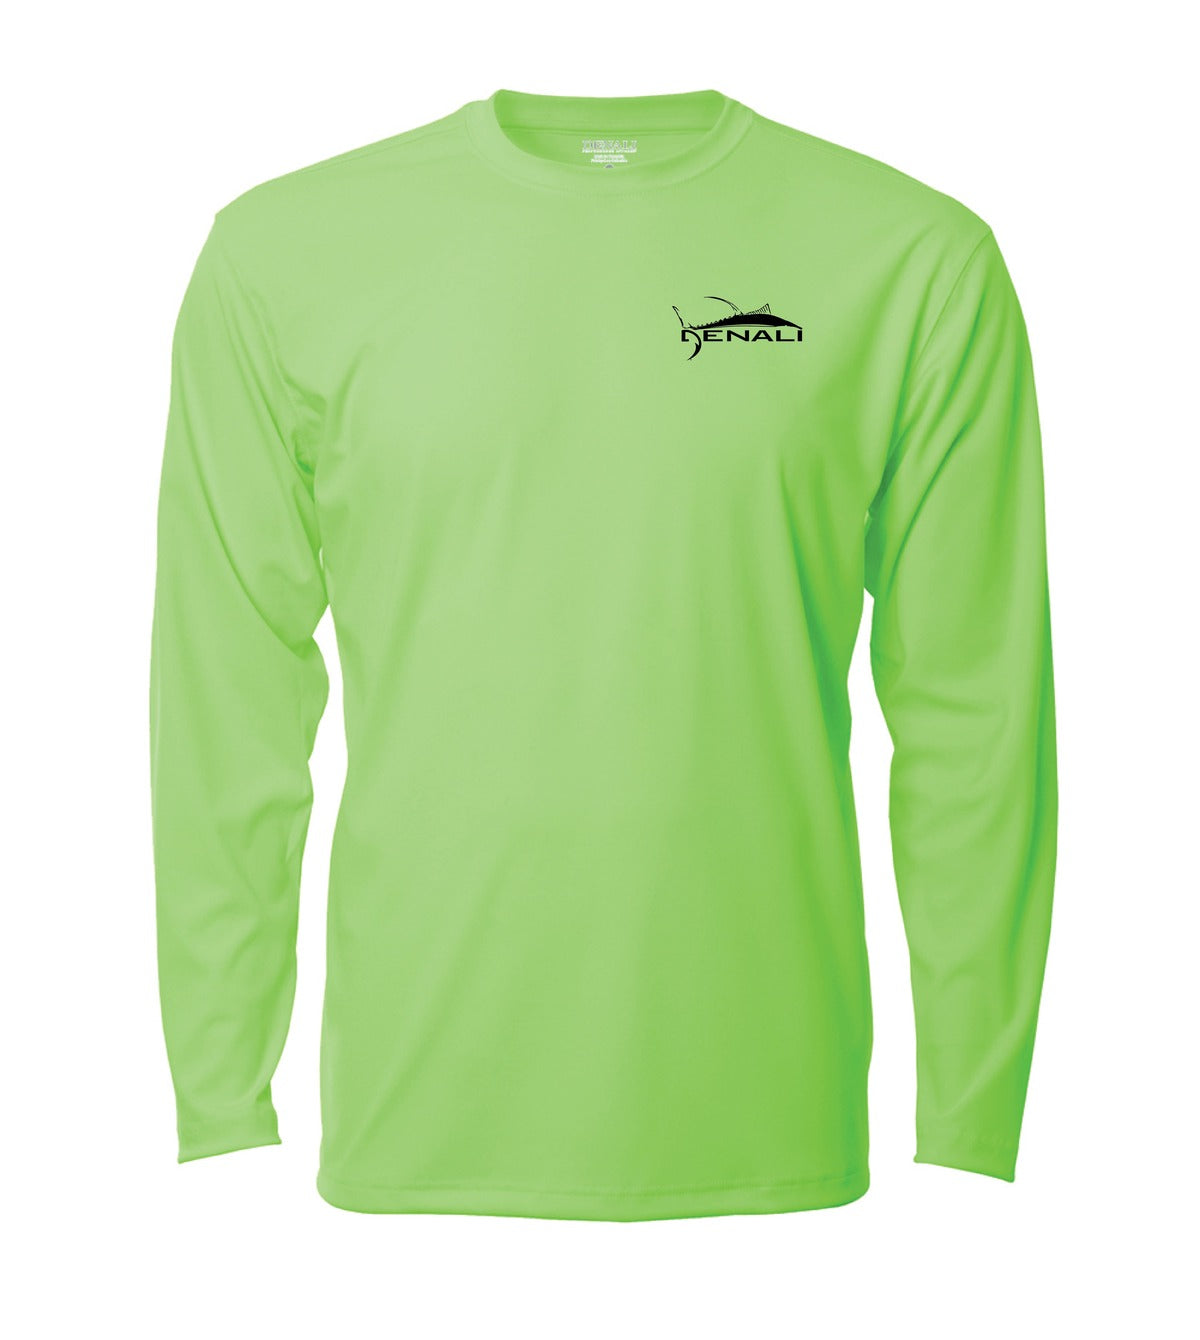 Tuna Fishing Shirts for Men Long Sleeve UPF 50+ UV Sun Protection